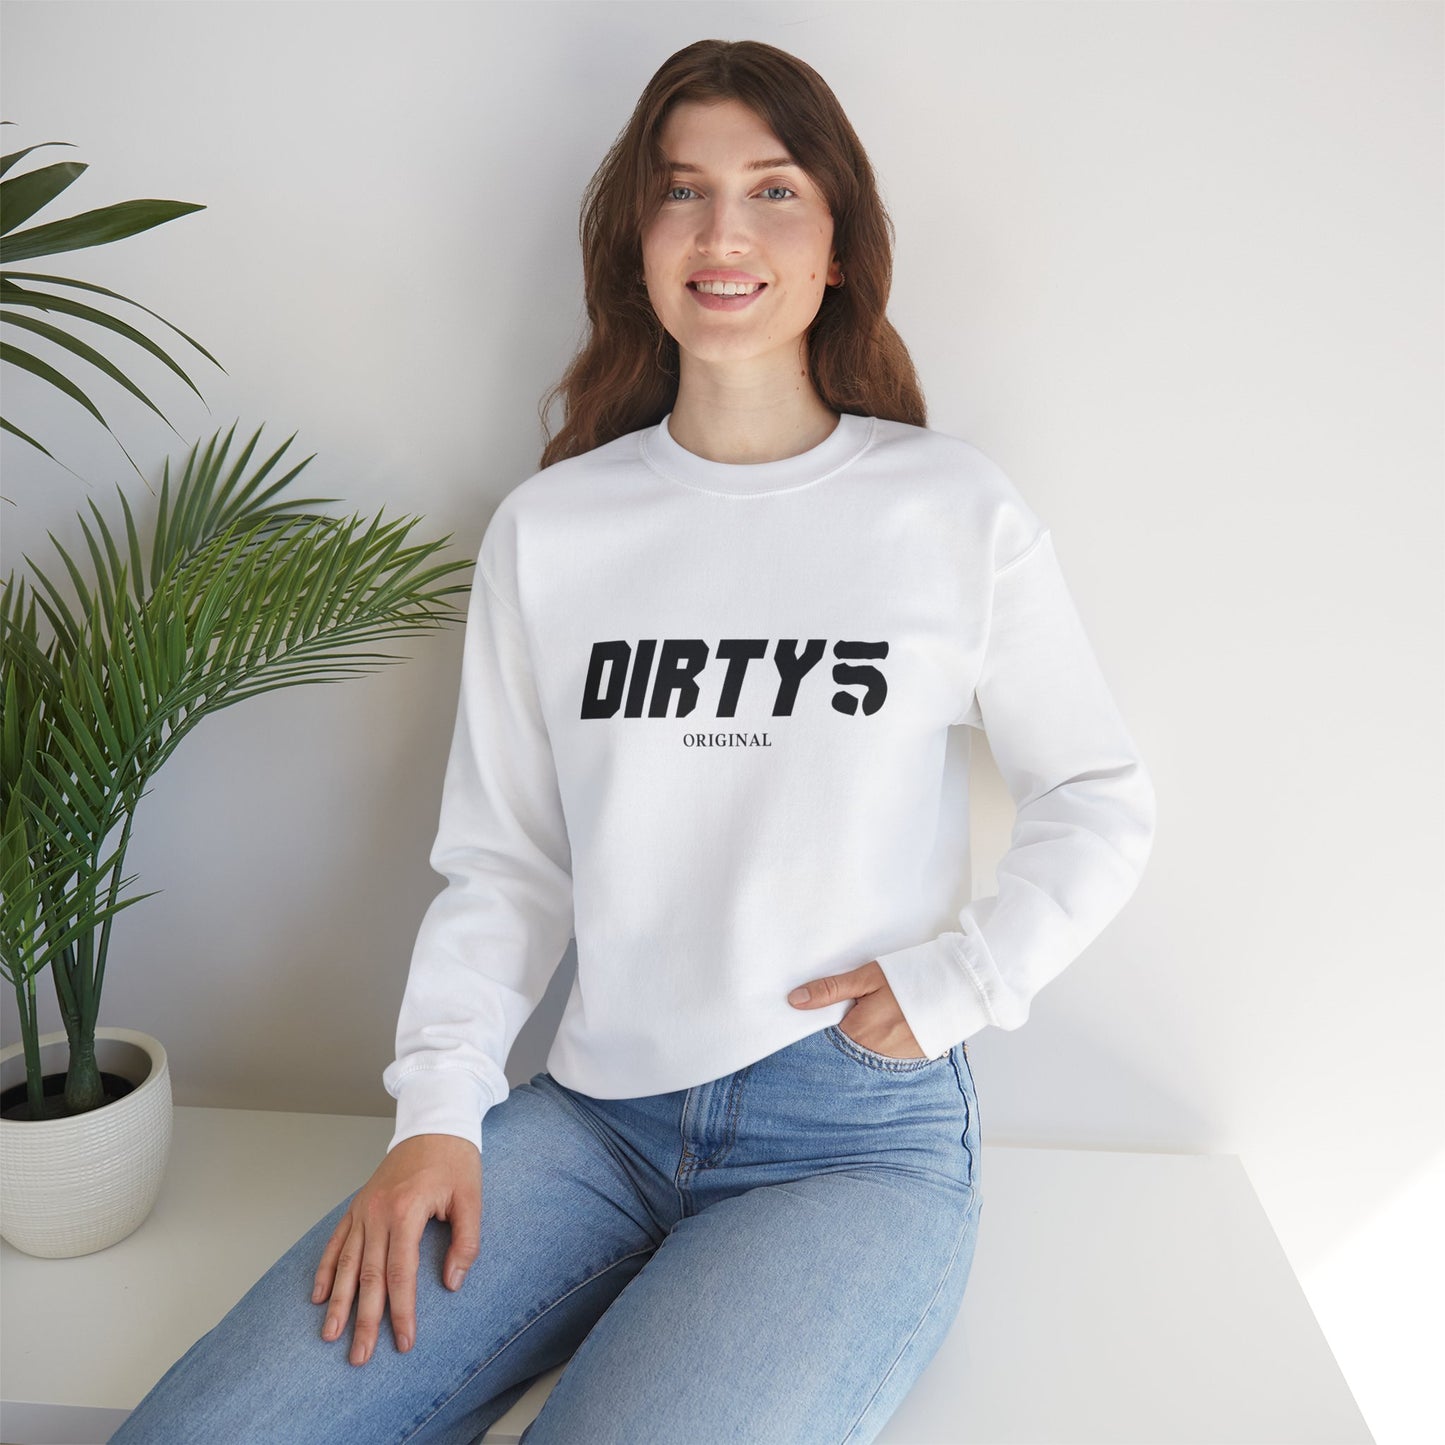 Dirty5 Crewneck Sweatshirt